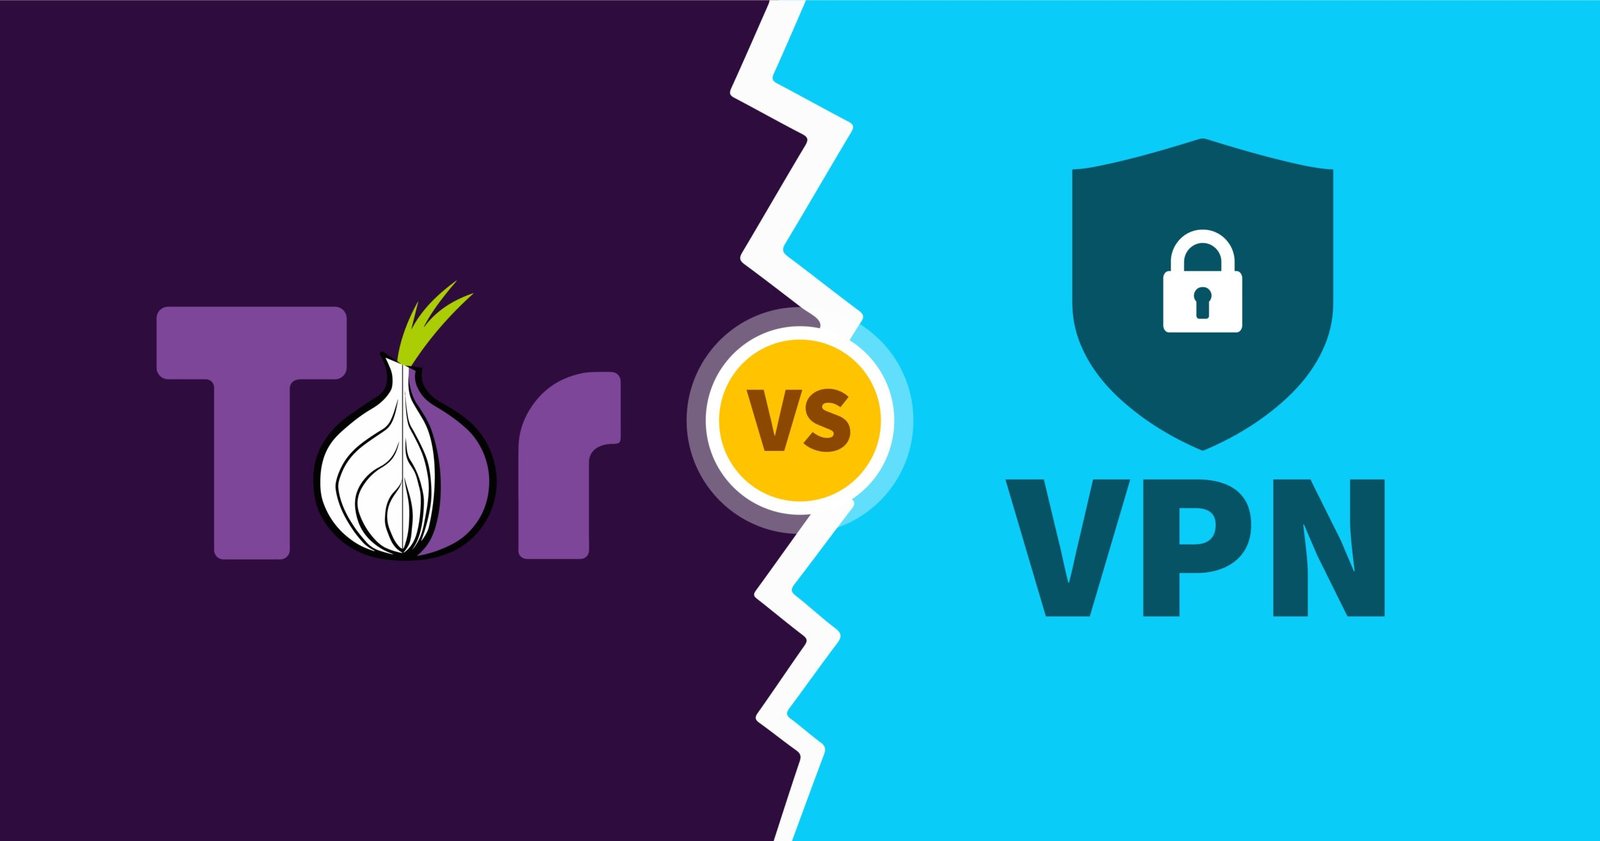 VPN vs Tor : Which is safer?